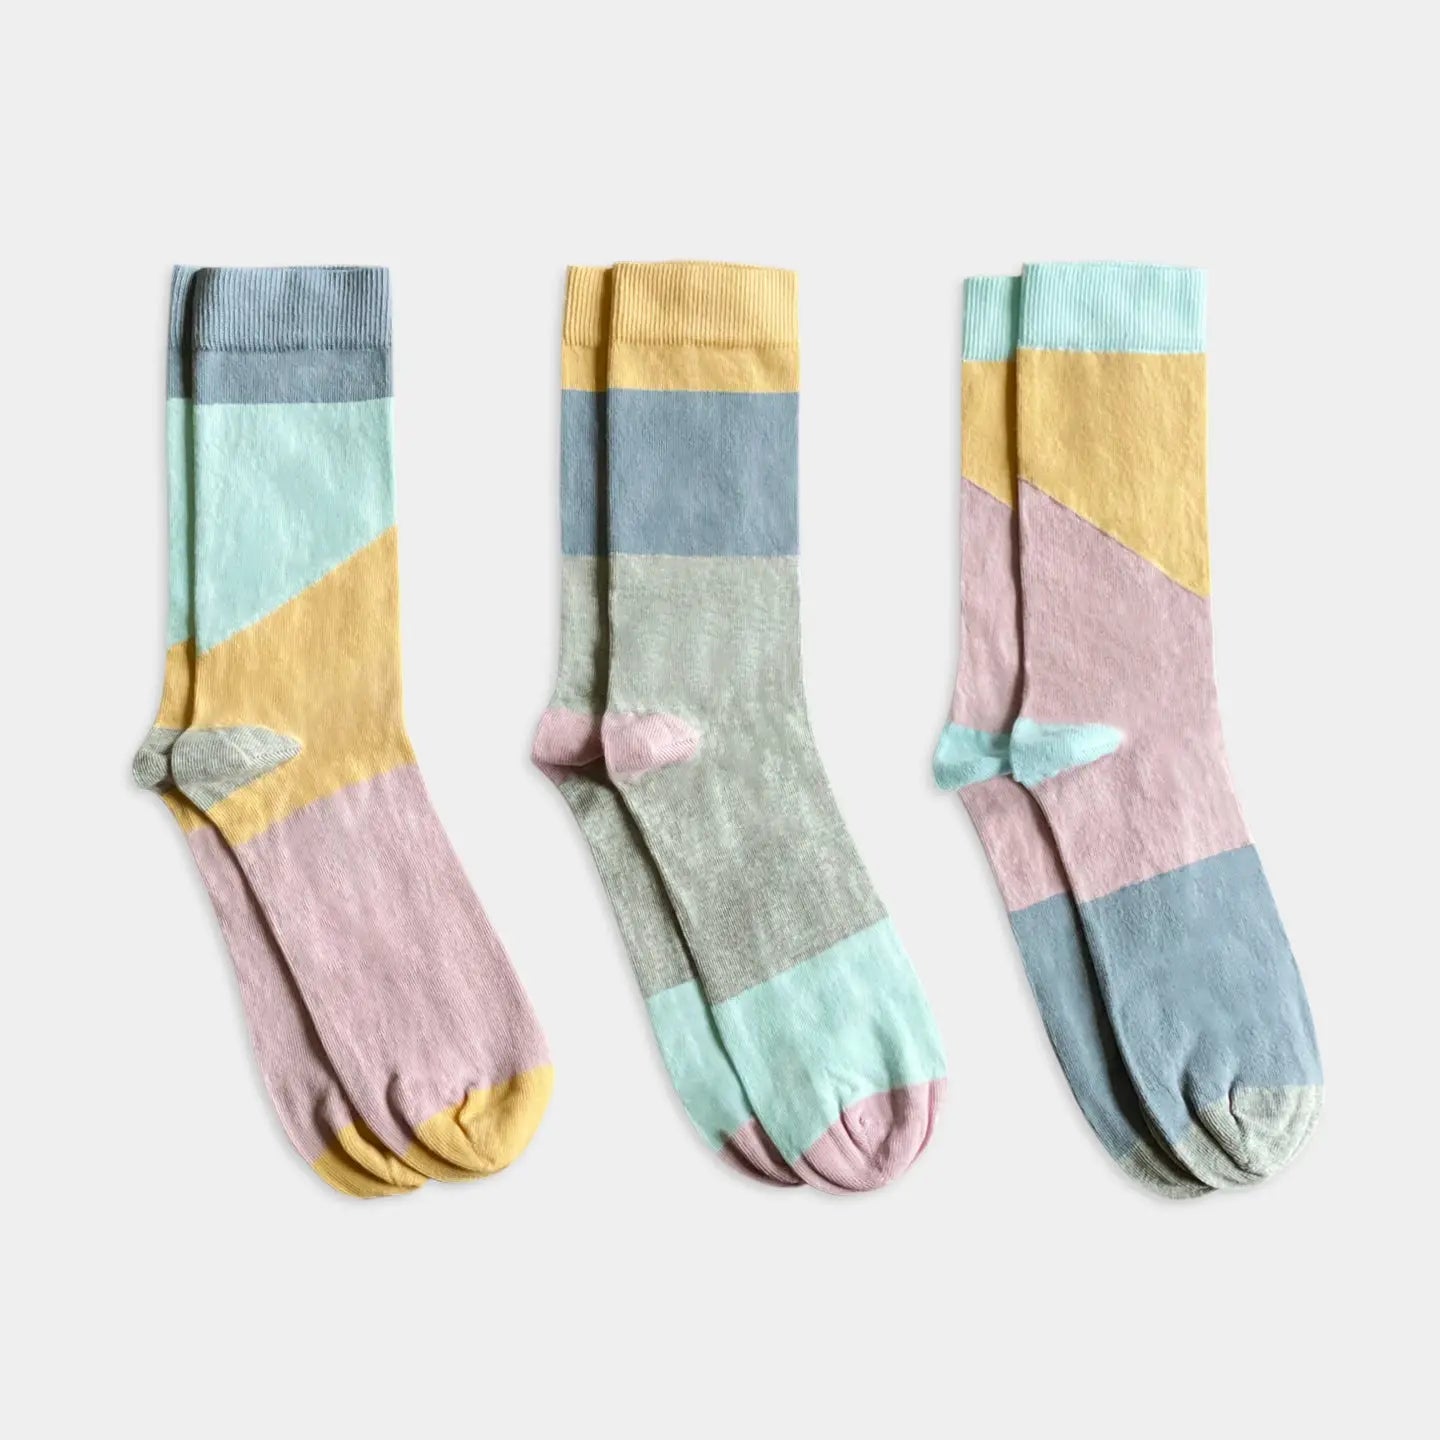 98% Organic Cotton Socks for Adults